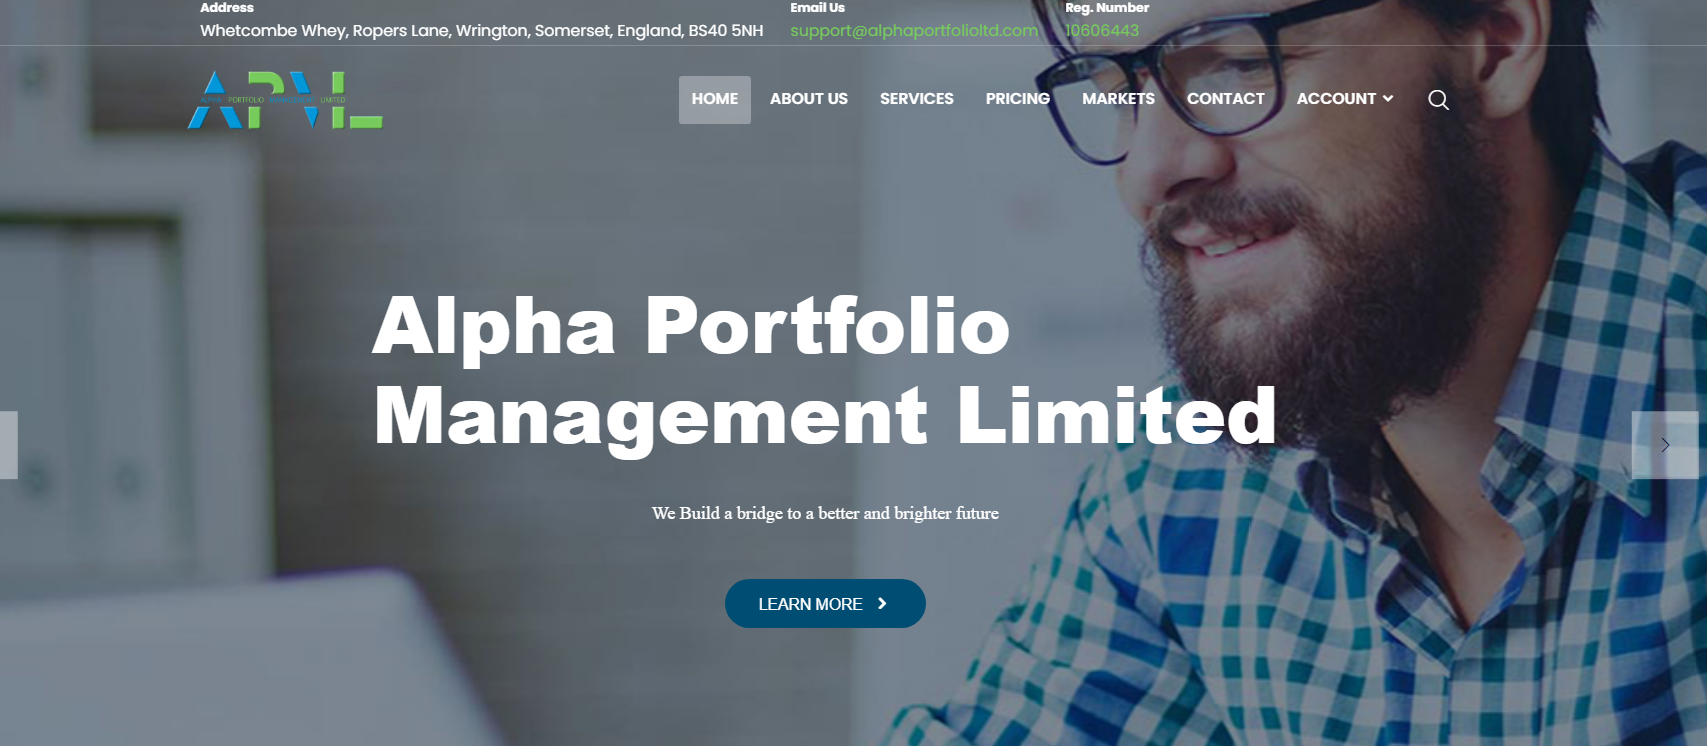 Alpha Portfolio Manangement Ltd-homepage